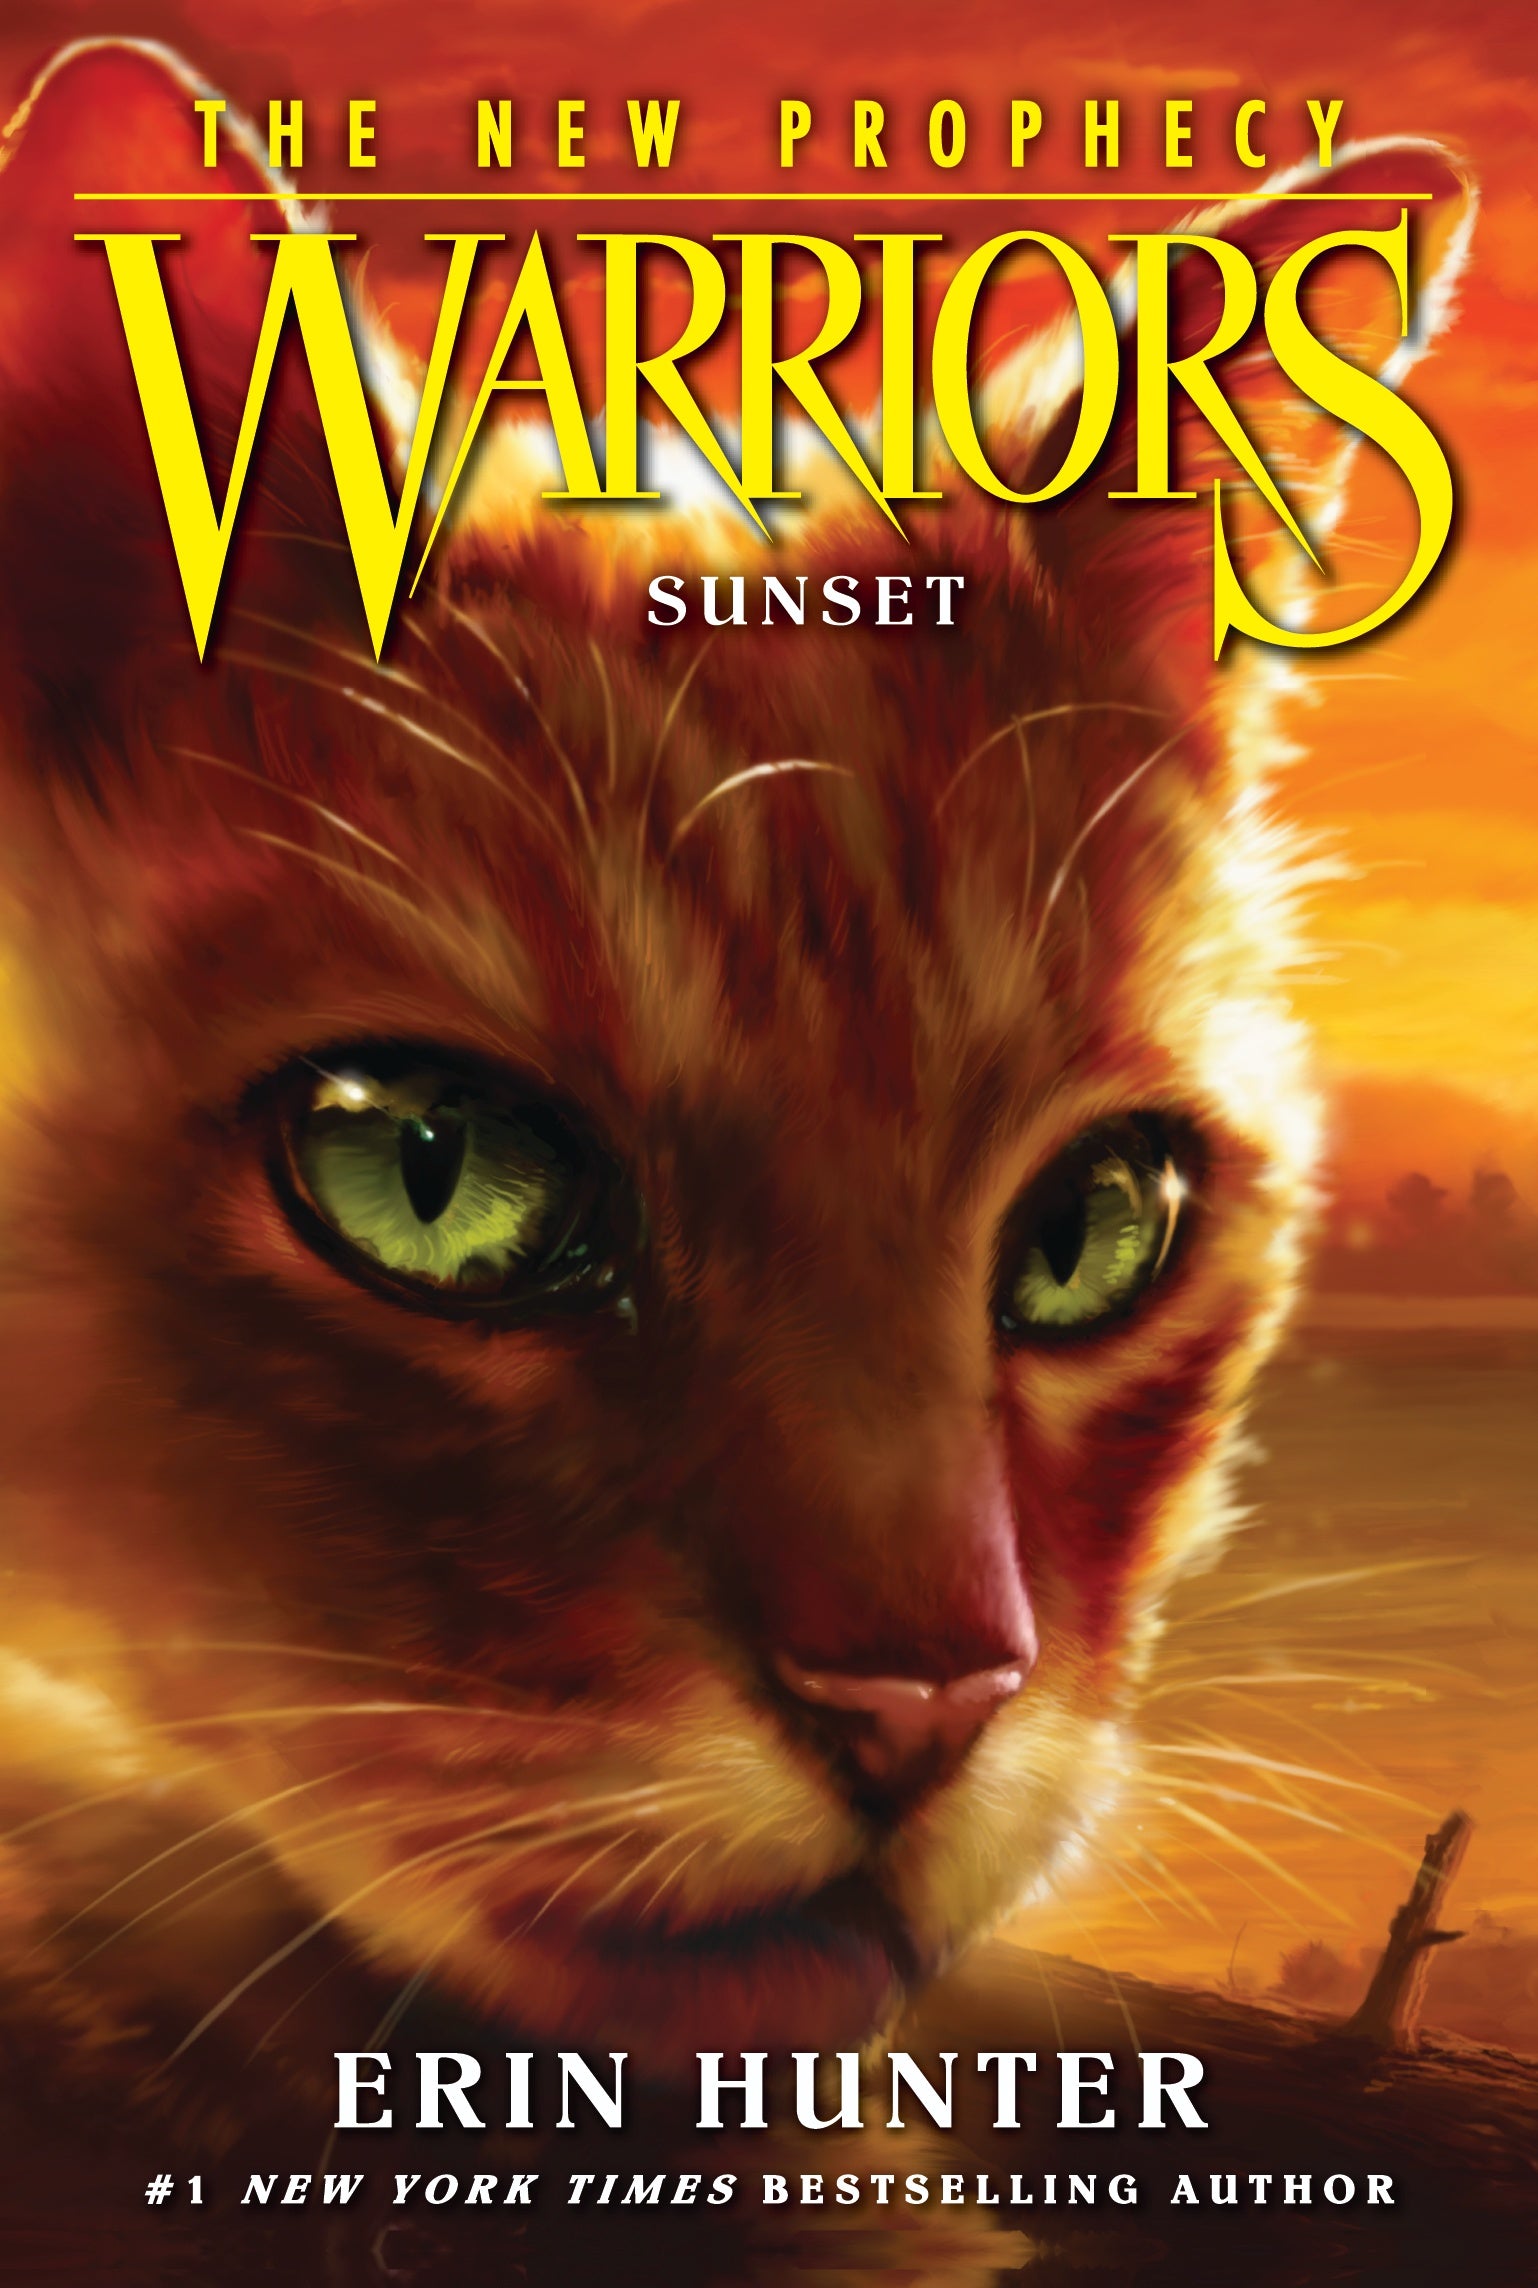 Warriors: A Starless Clan #2: Sky on Apple Books